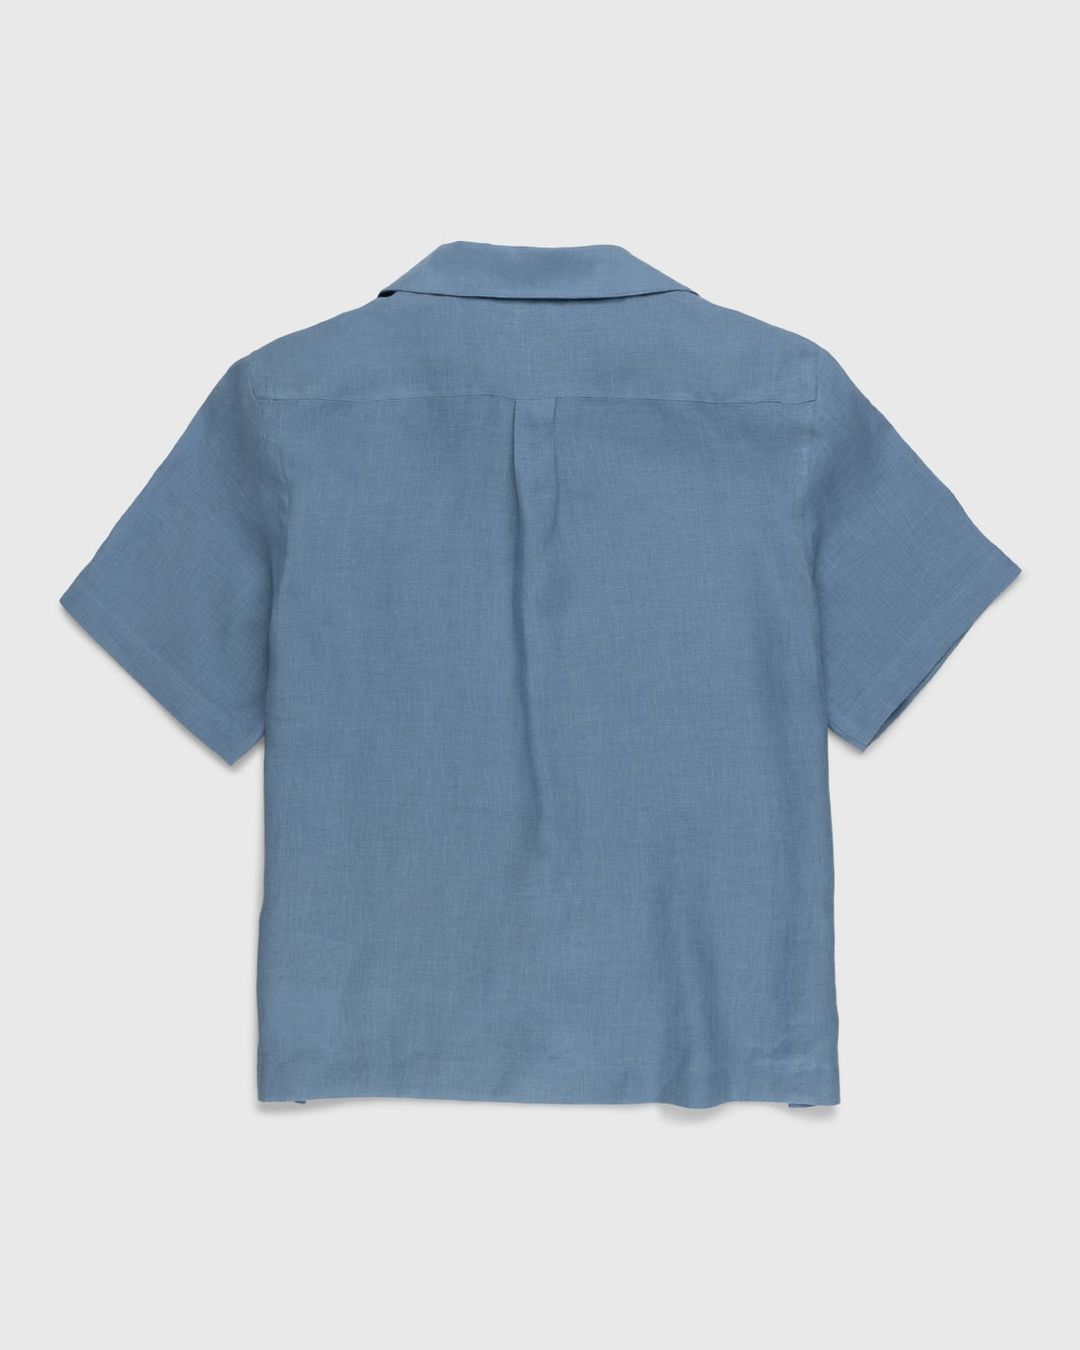 Loewe – Paula's Ibiza Linen Bowling Shirt Blue | Highsnobiety Shop